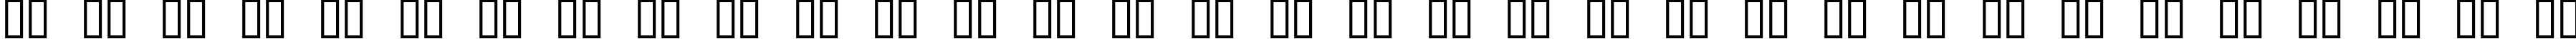 Пример написания русского алфавита шрифтом Future Sallow Wide